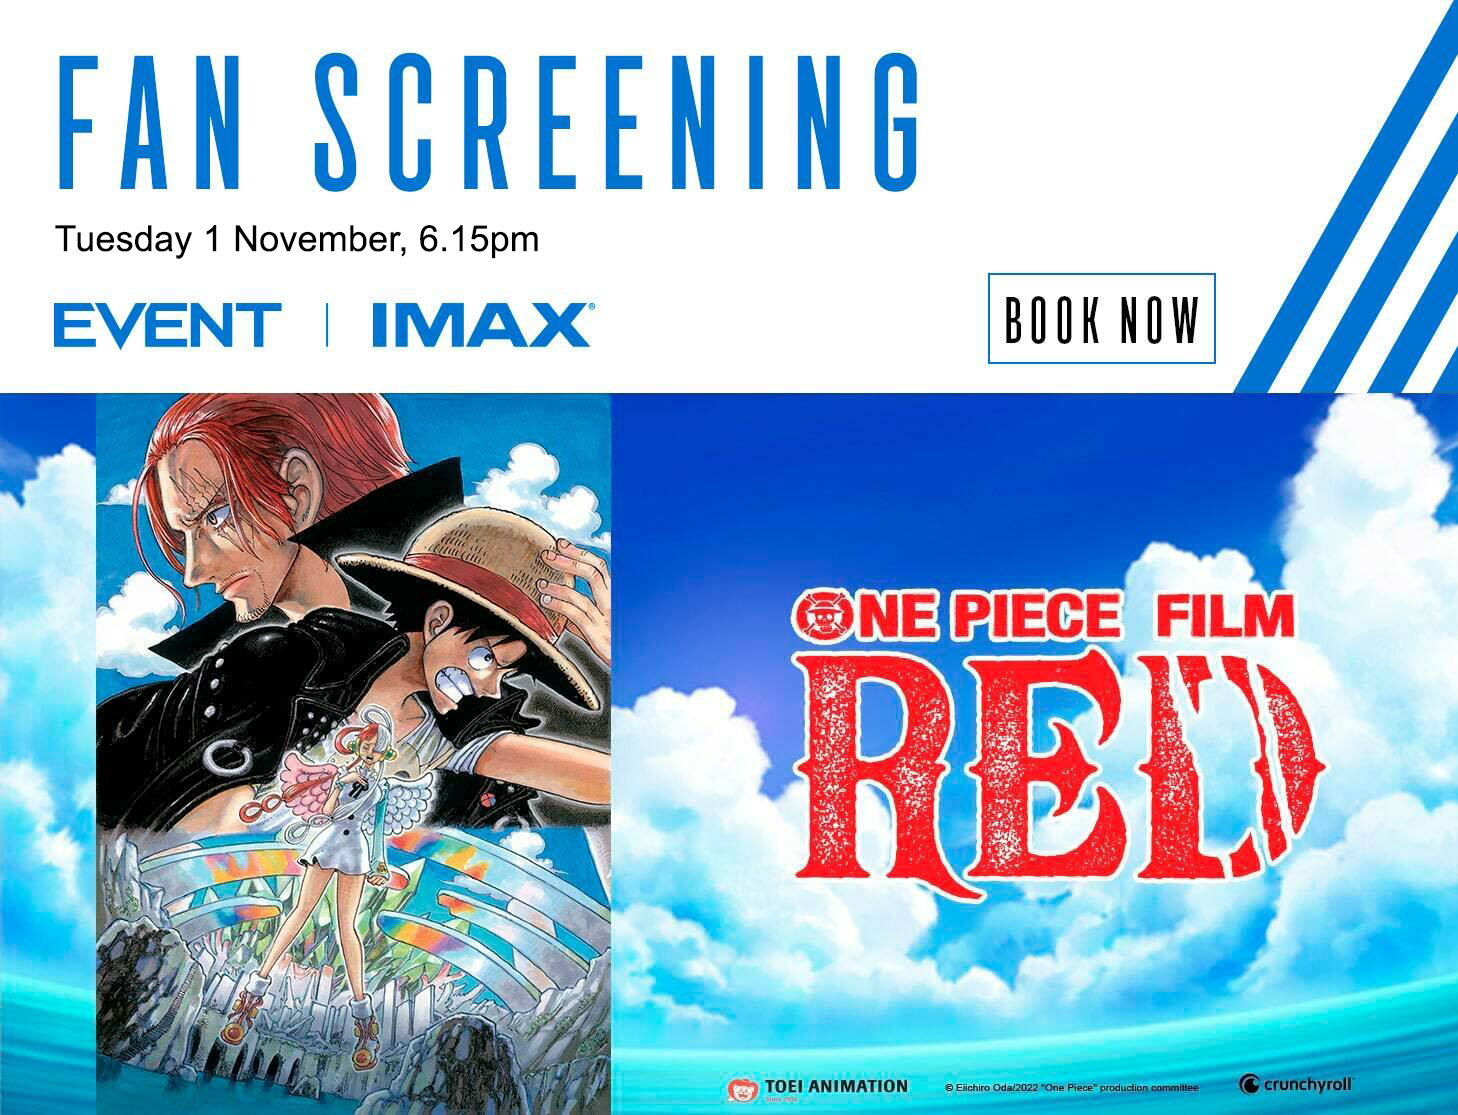 One Piece Film Red Event Cinemas